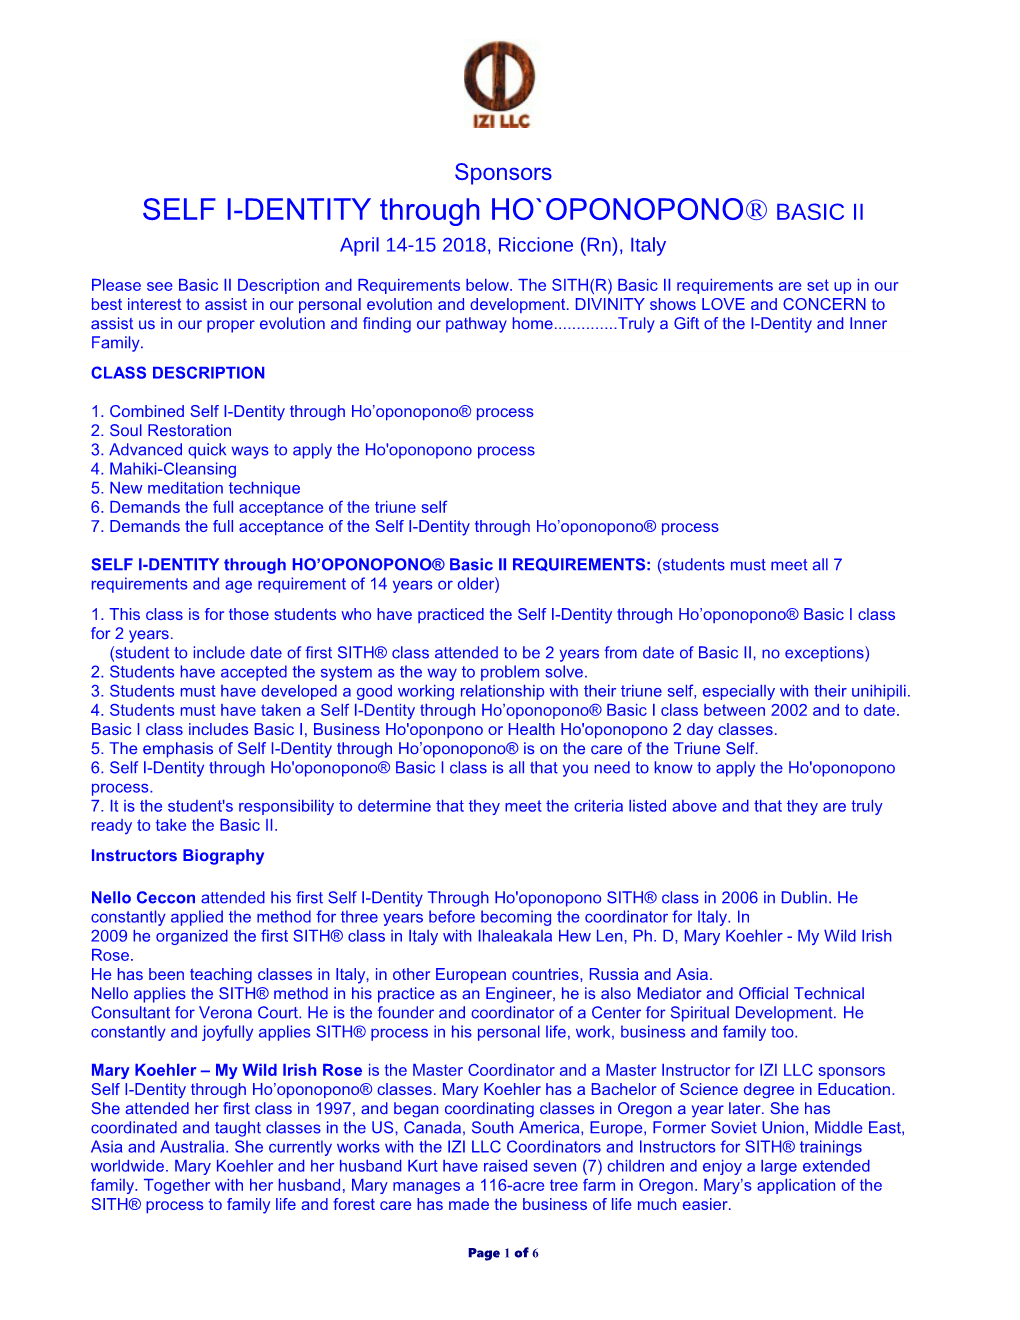 SELF I-DENTITY Through HO OPONOPONO BASIC II